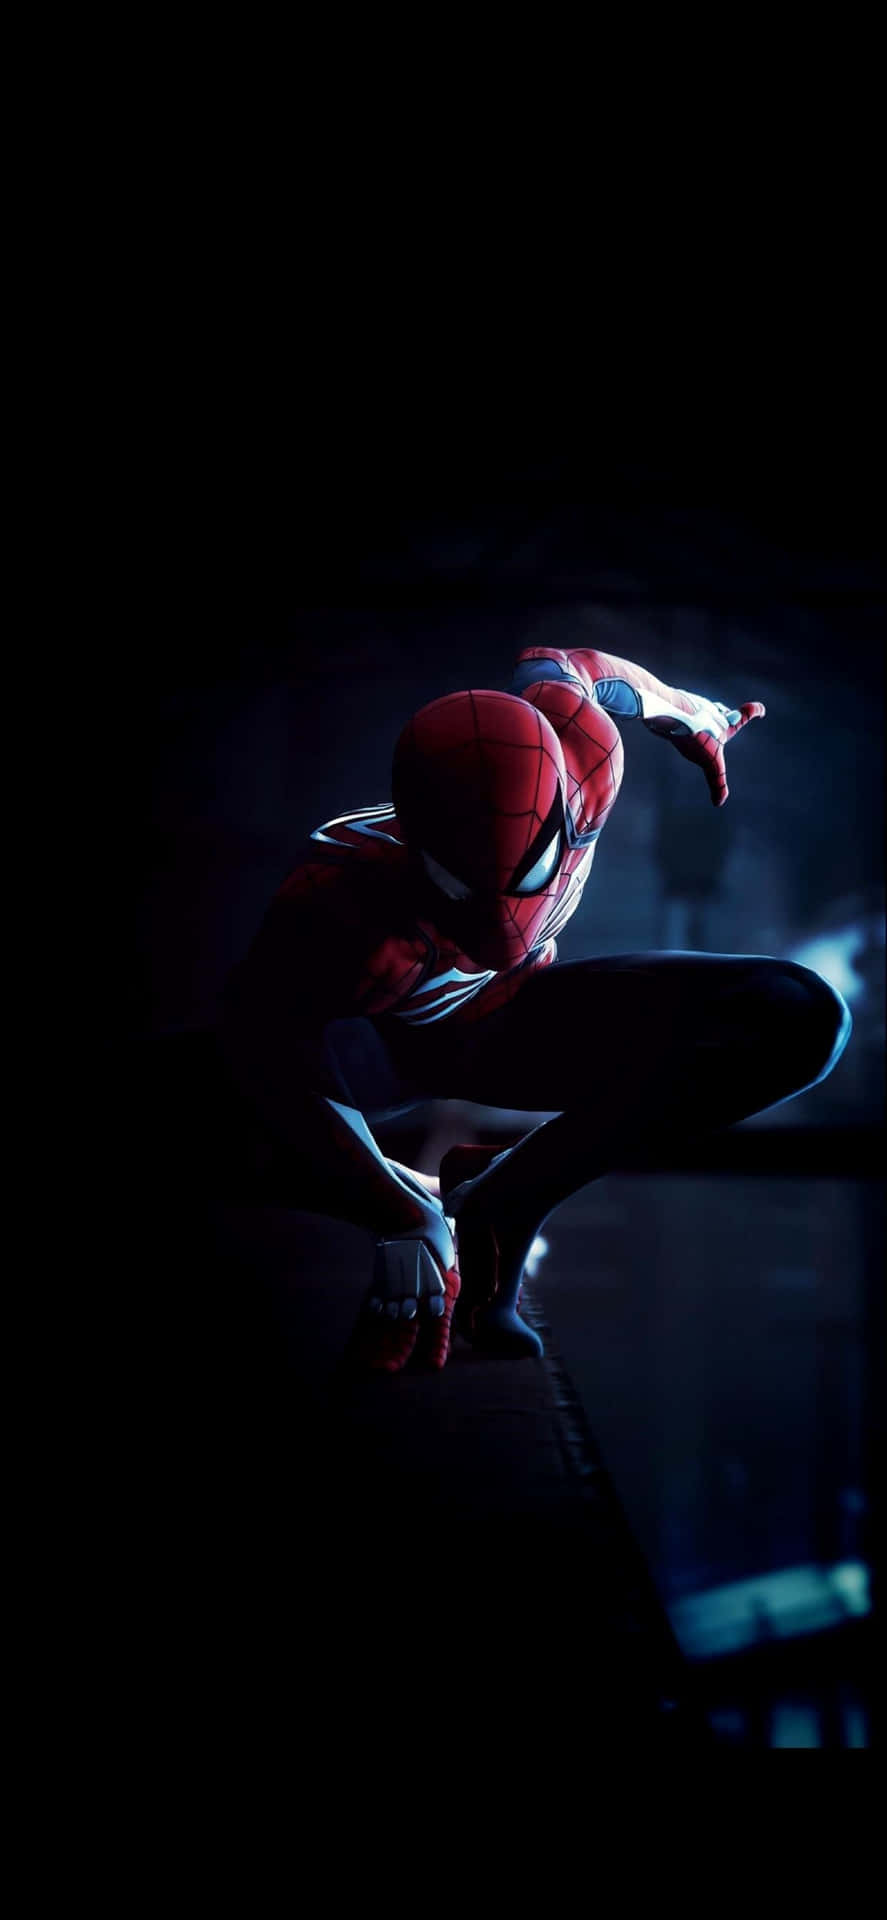 An Amazing Spider Man Iphone for Adrenaline Junkies Wallpaper